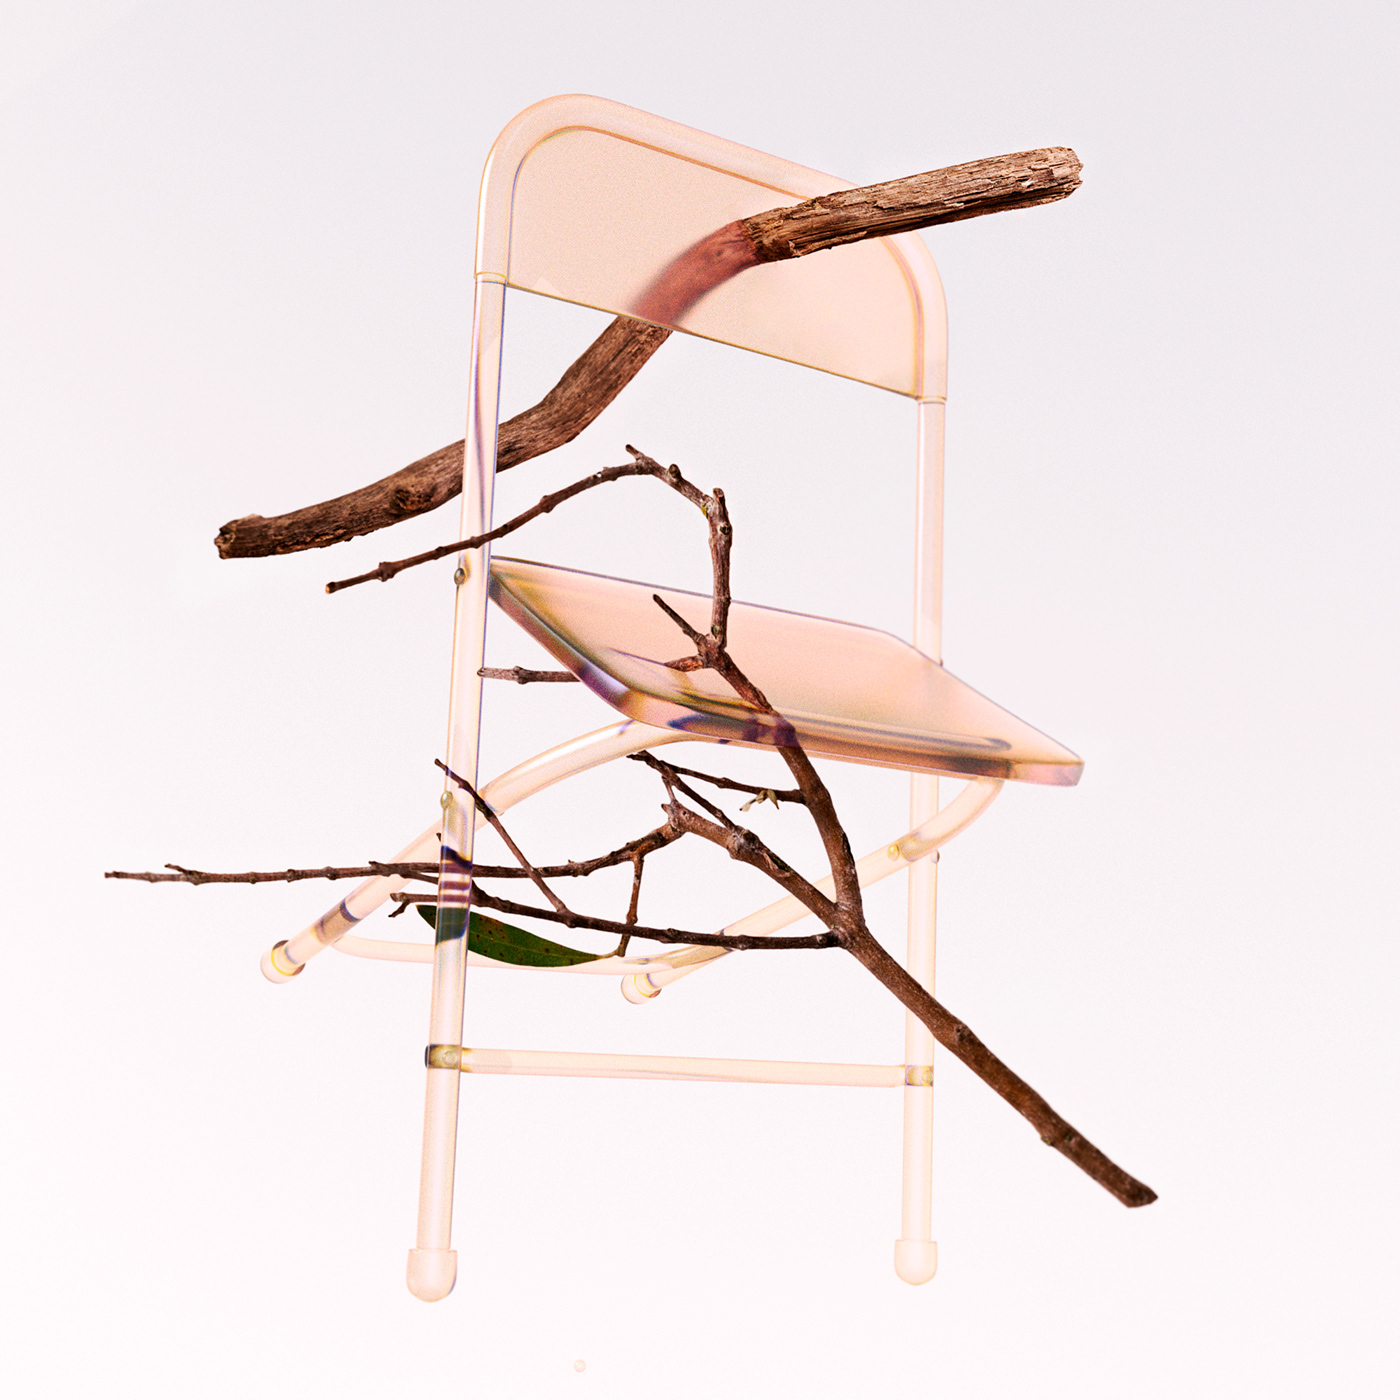 3d art modern Nature Photography  piece of furniture pop art design product 3D surreal TRENDING